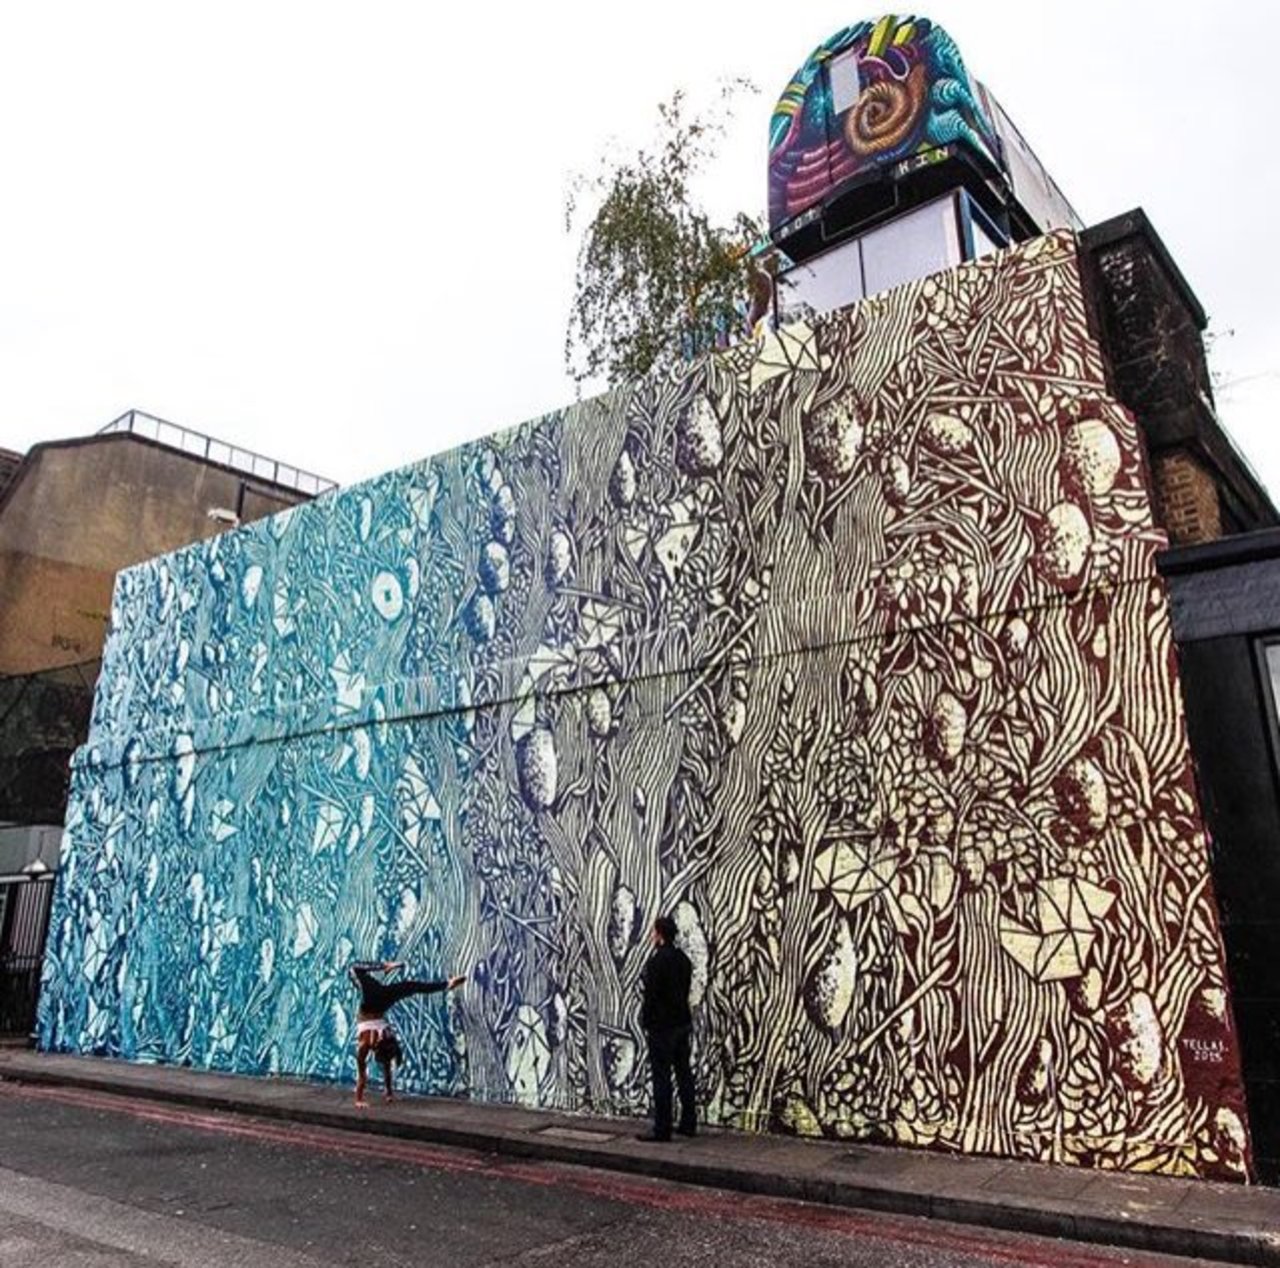 RT @EastGraffiti: RT: @GoogleStreetArt

New Street Art by Tellas in Shoreditch London 

#art #graffiti #mural #streetart … https://t.co/0YZRFSgPfI